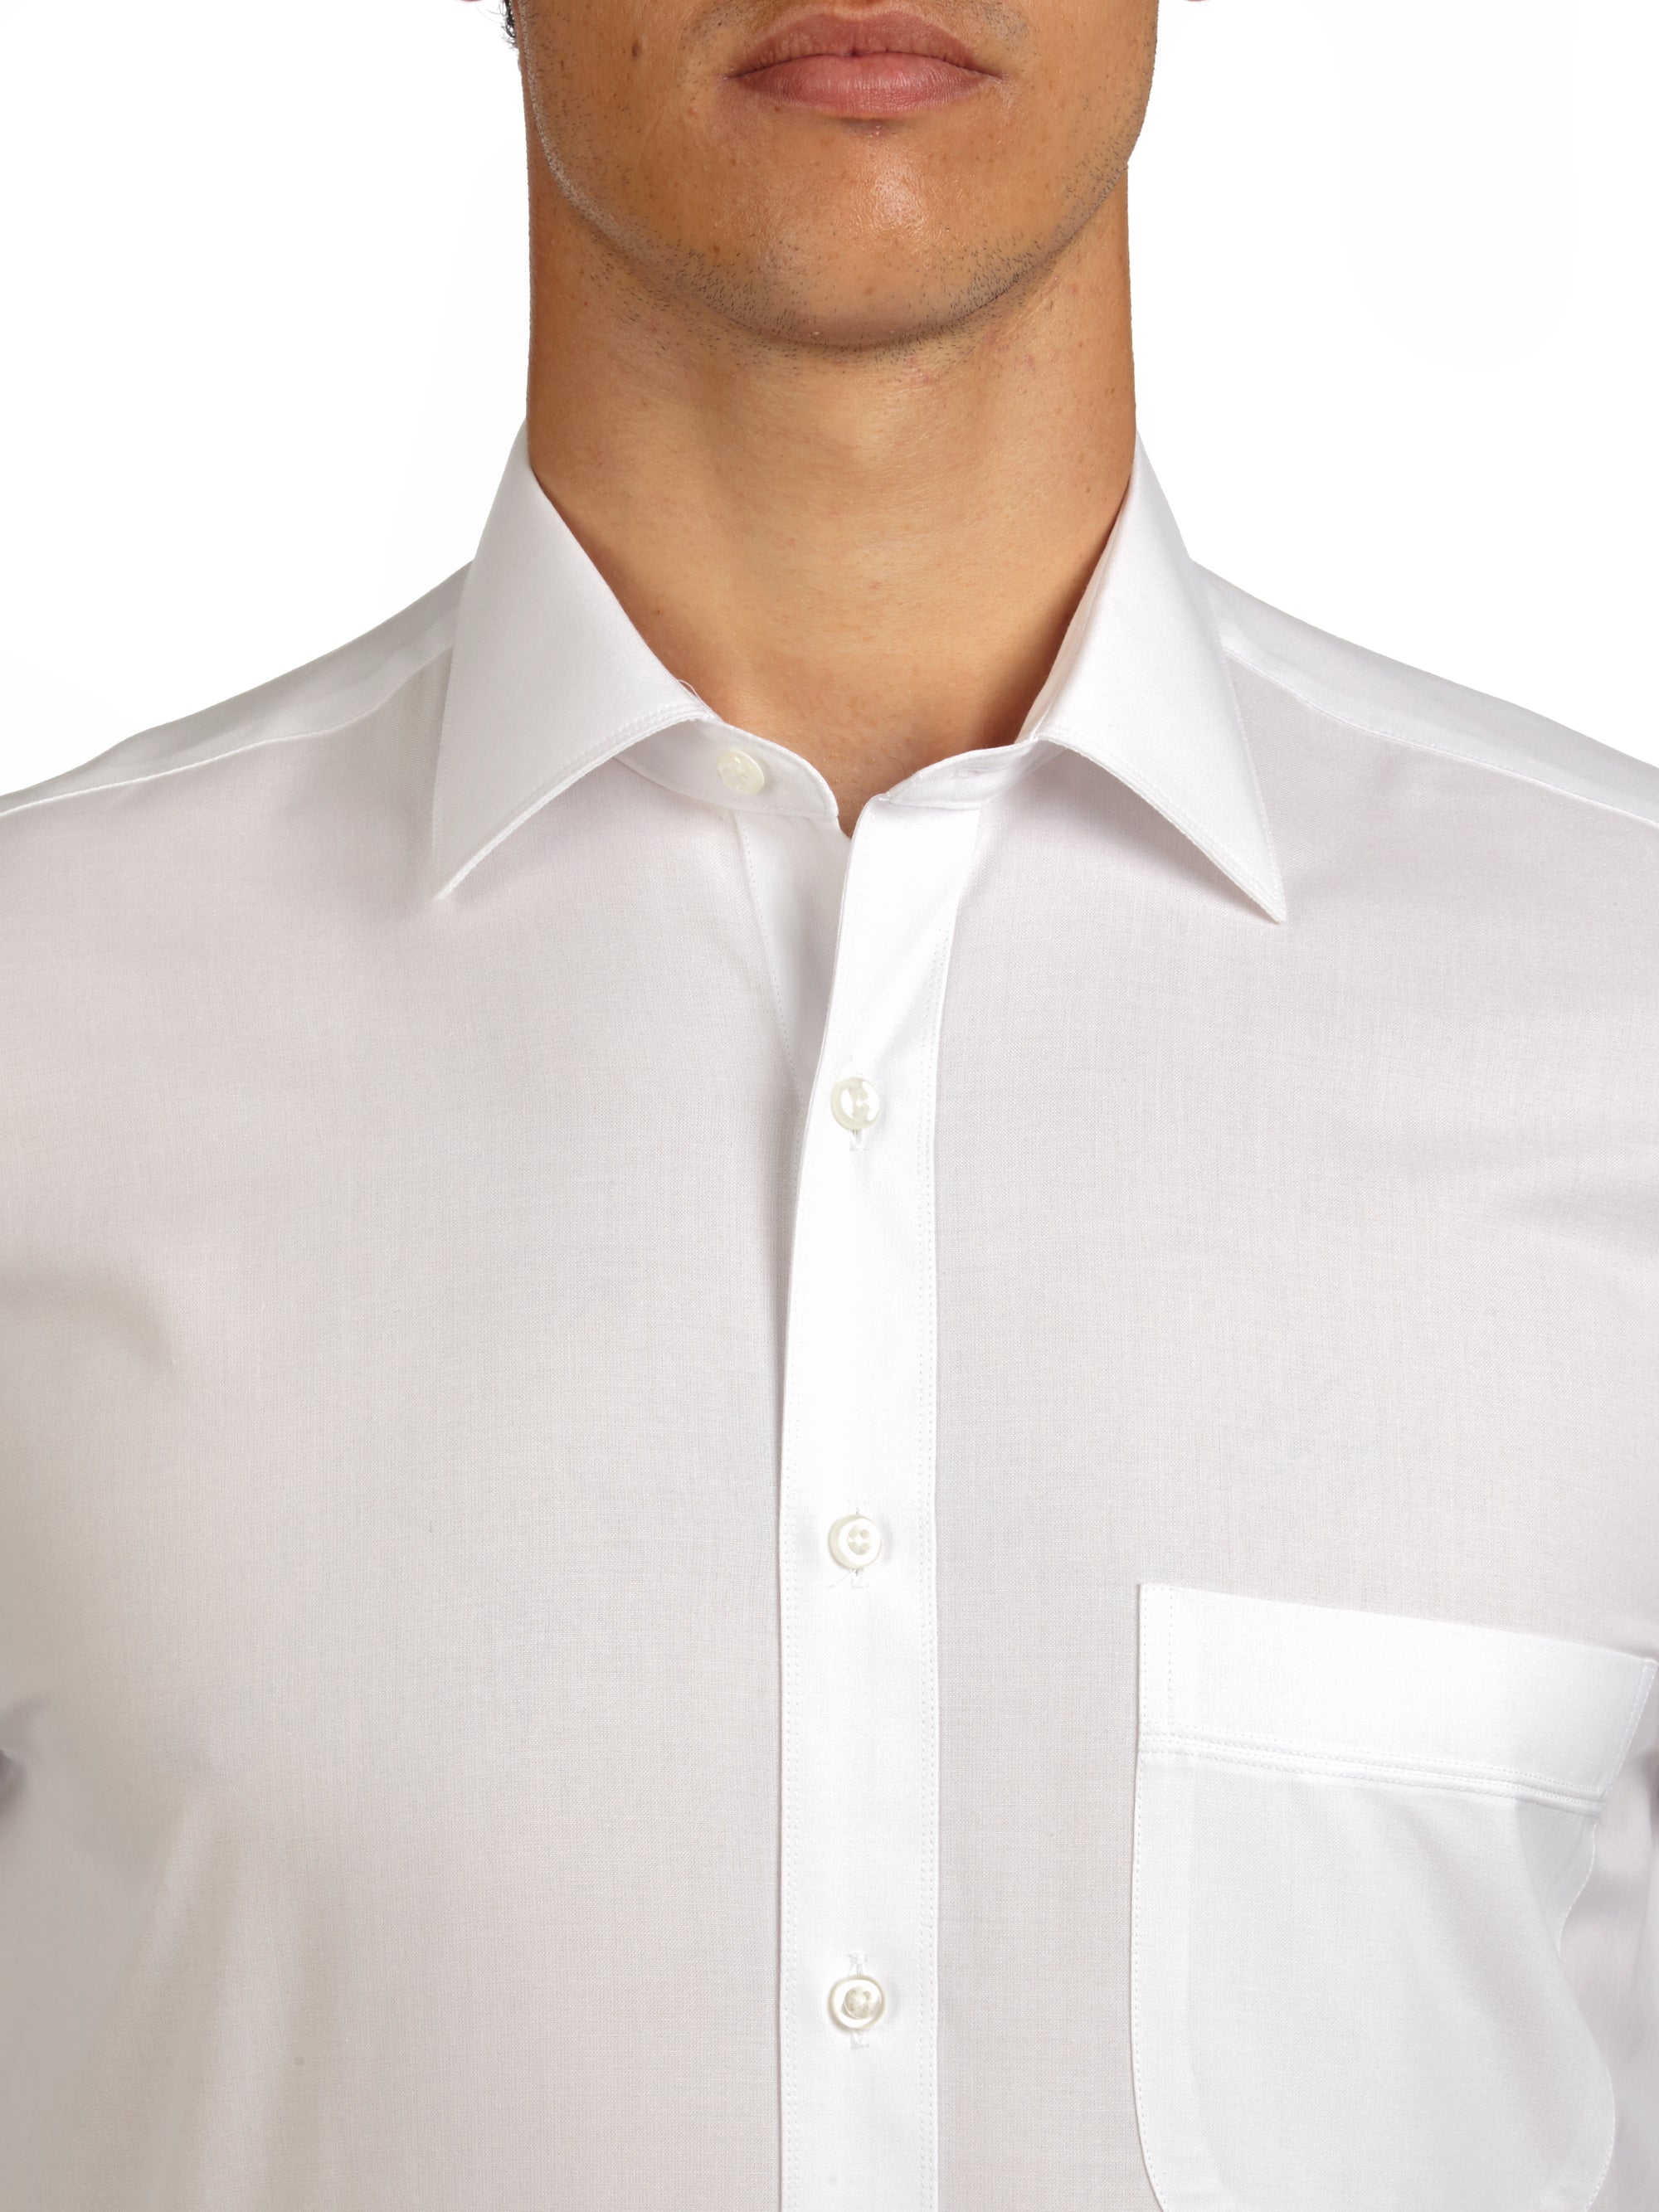 White Gold Label Shirt – Classic Fit - Ganton Shirts